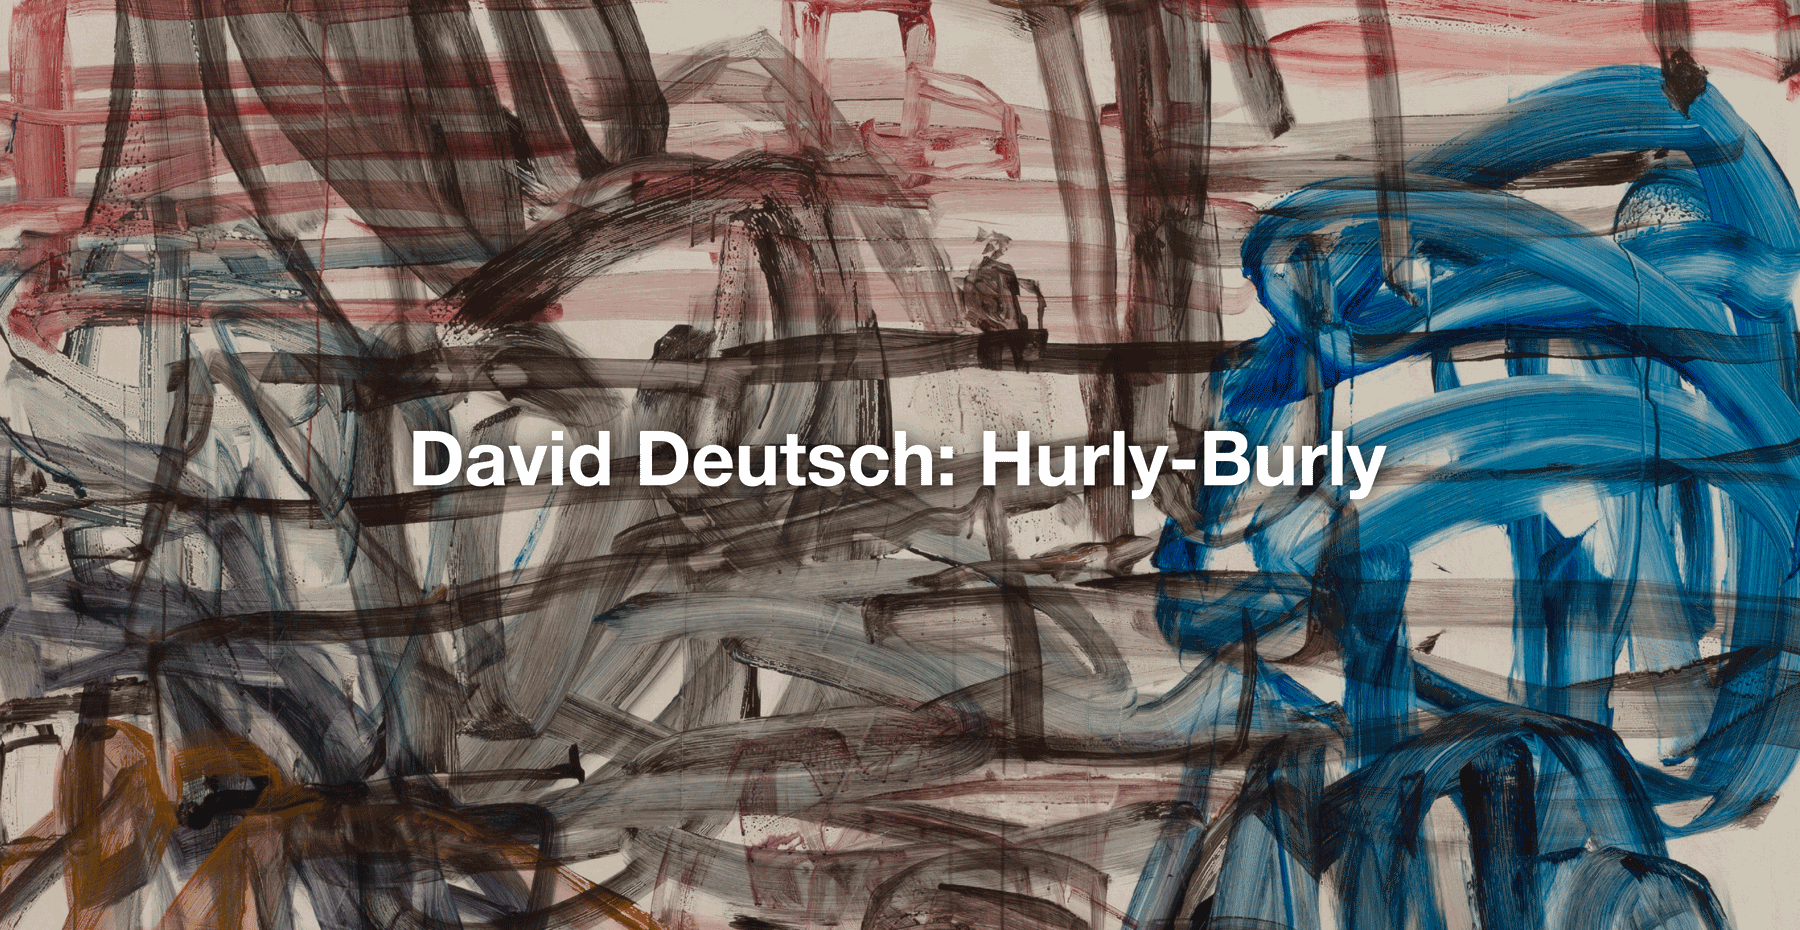 David Deutsch: Hurly-Burly
Two Part Exhibition with Eva Presenhuber
Opening January 11, 2023
39 + 55 Great Jones Street

Image Link